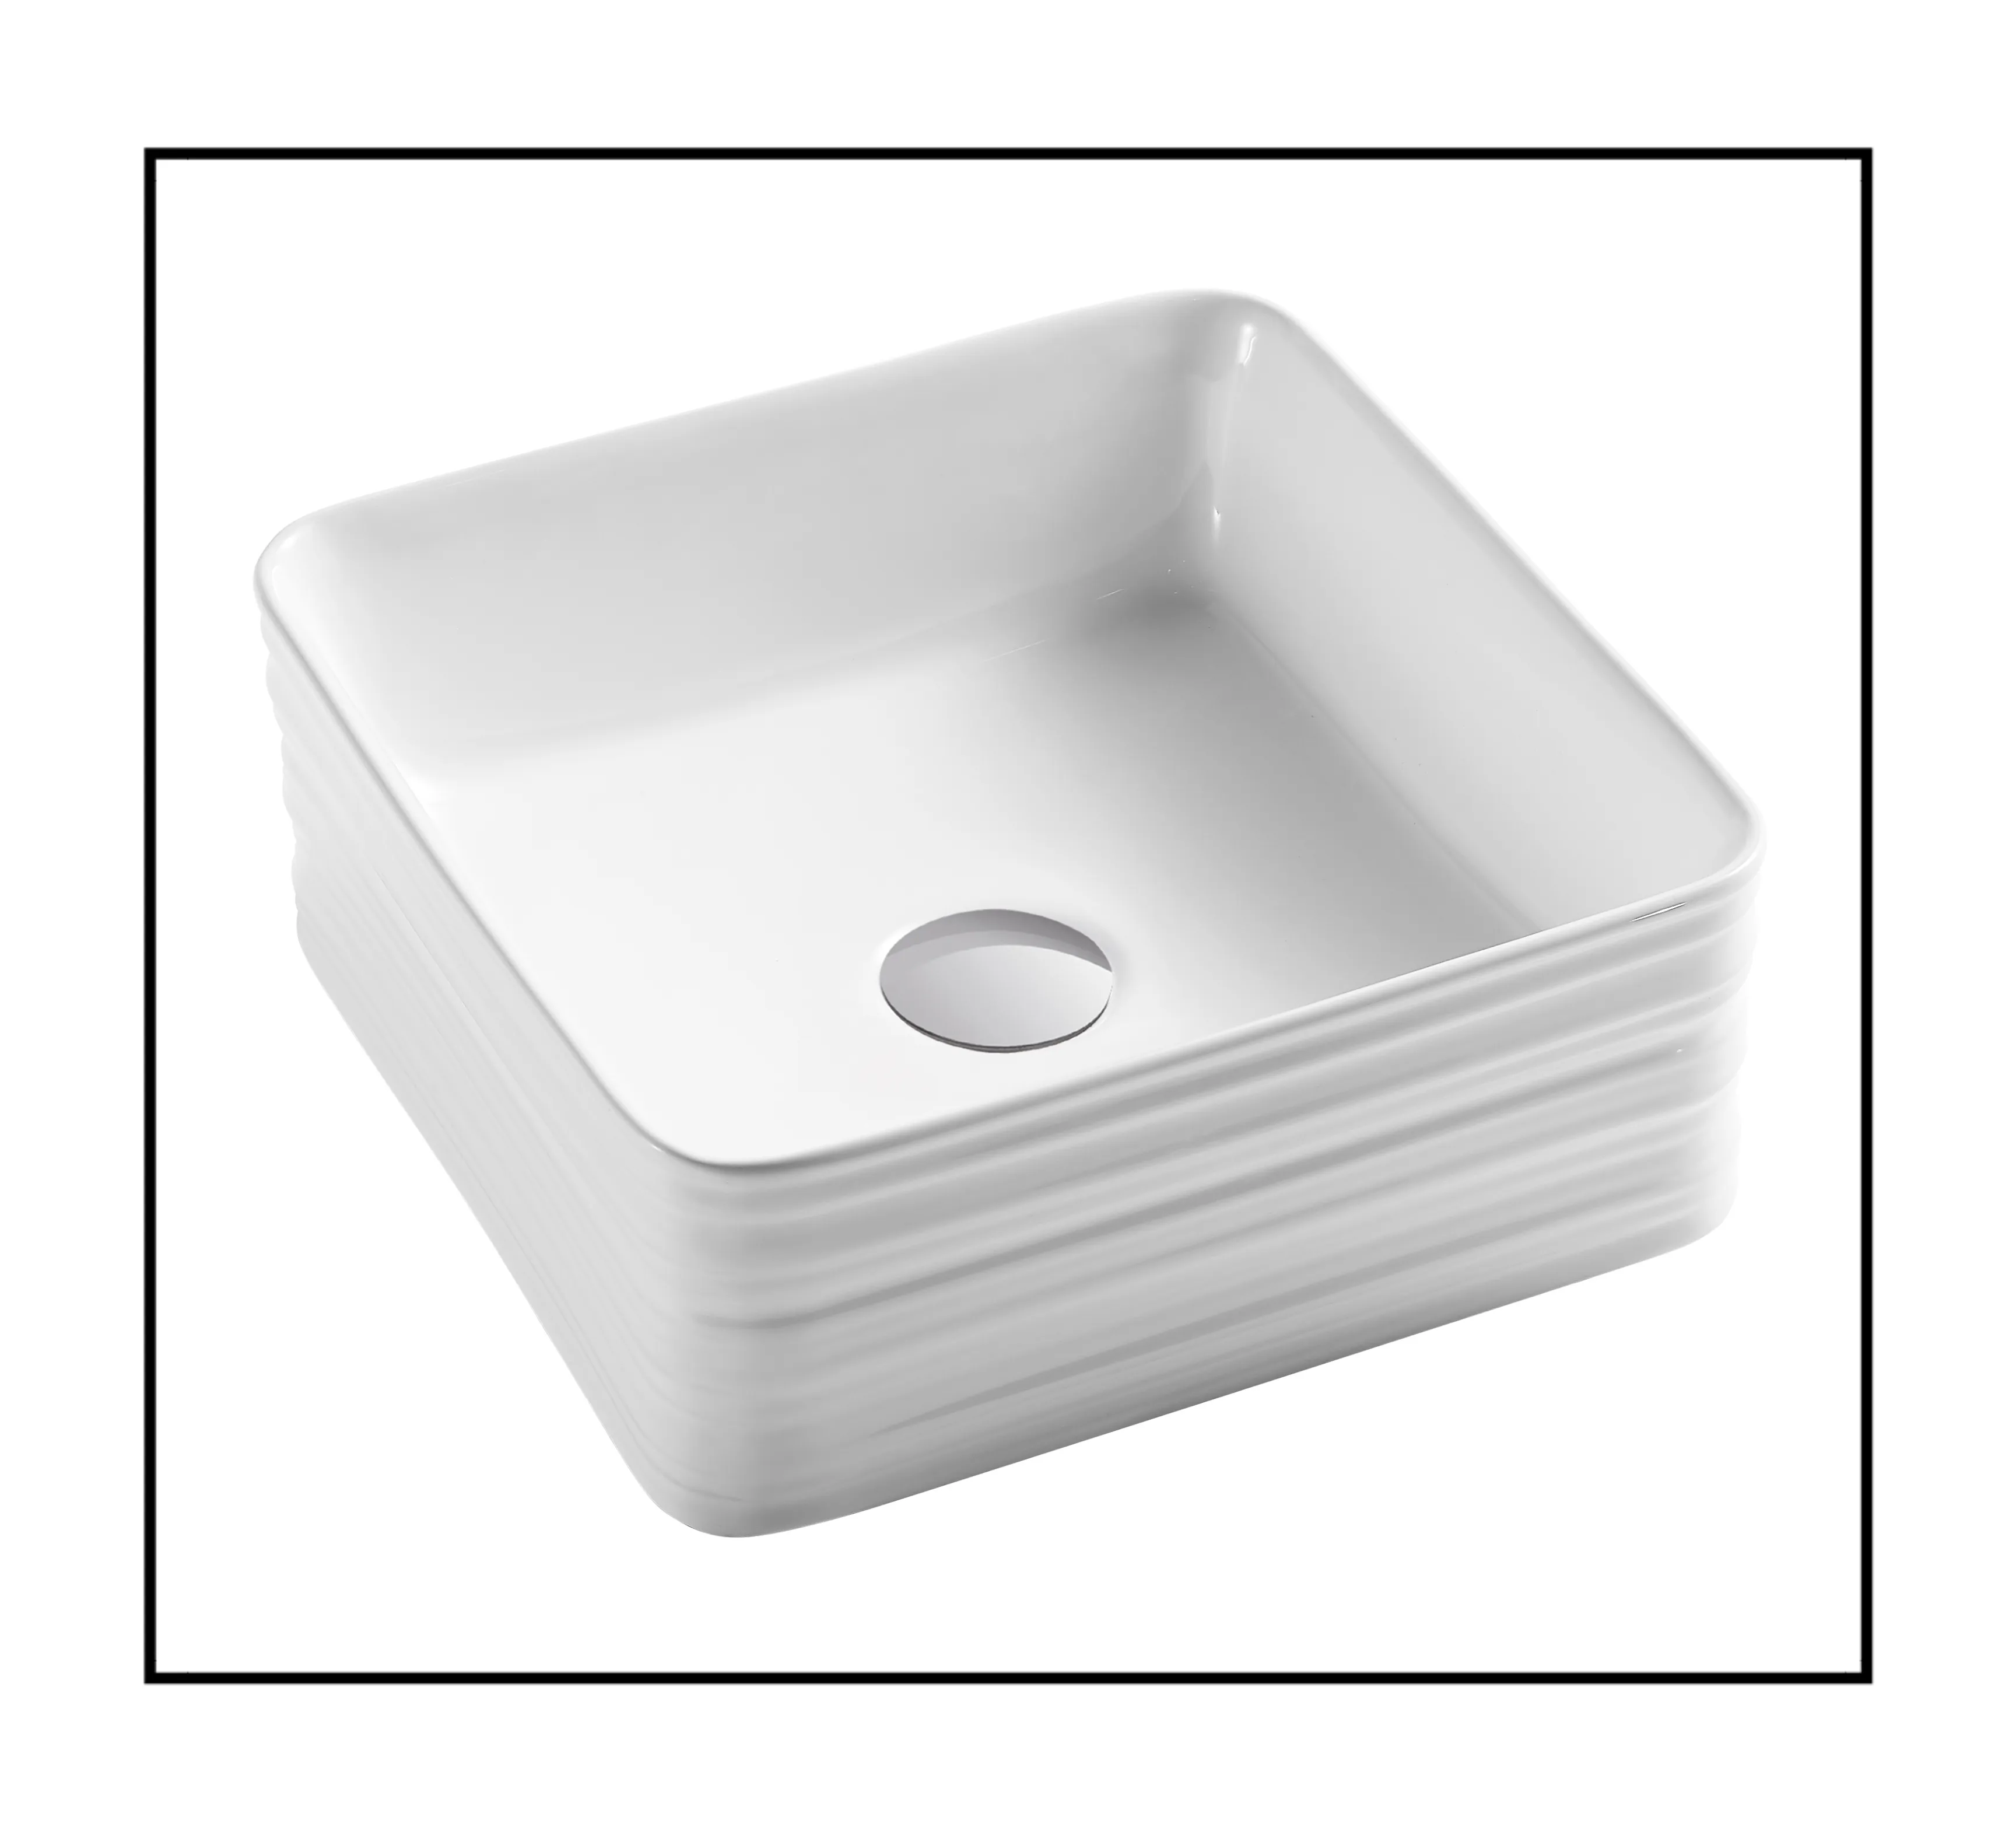 Chinese Factory Wash Basin Popular Sanitary Ware Bathroom lavamanos Square Shape Ceramic Washbasin Sink